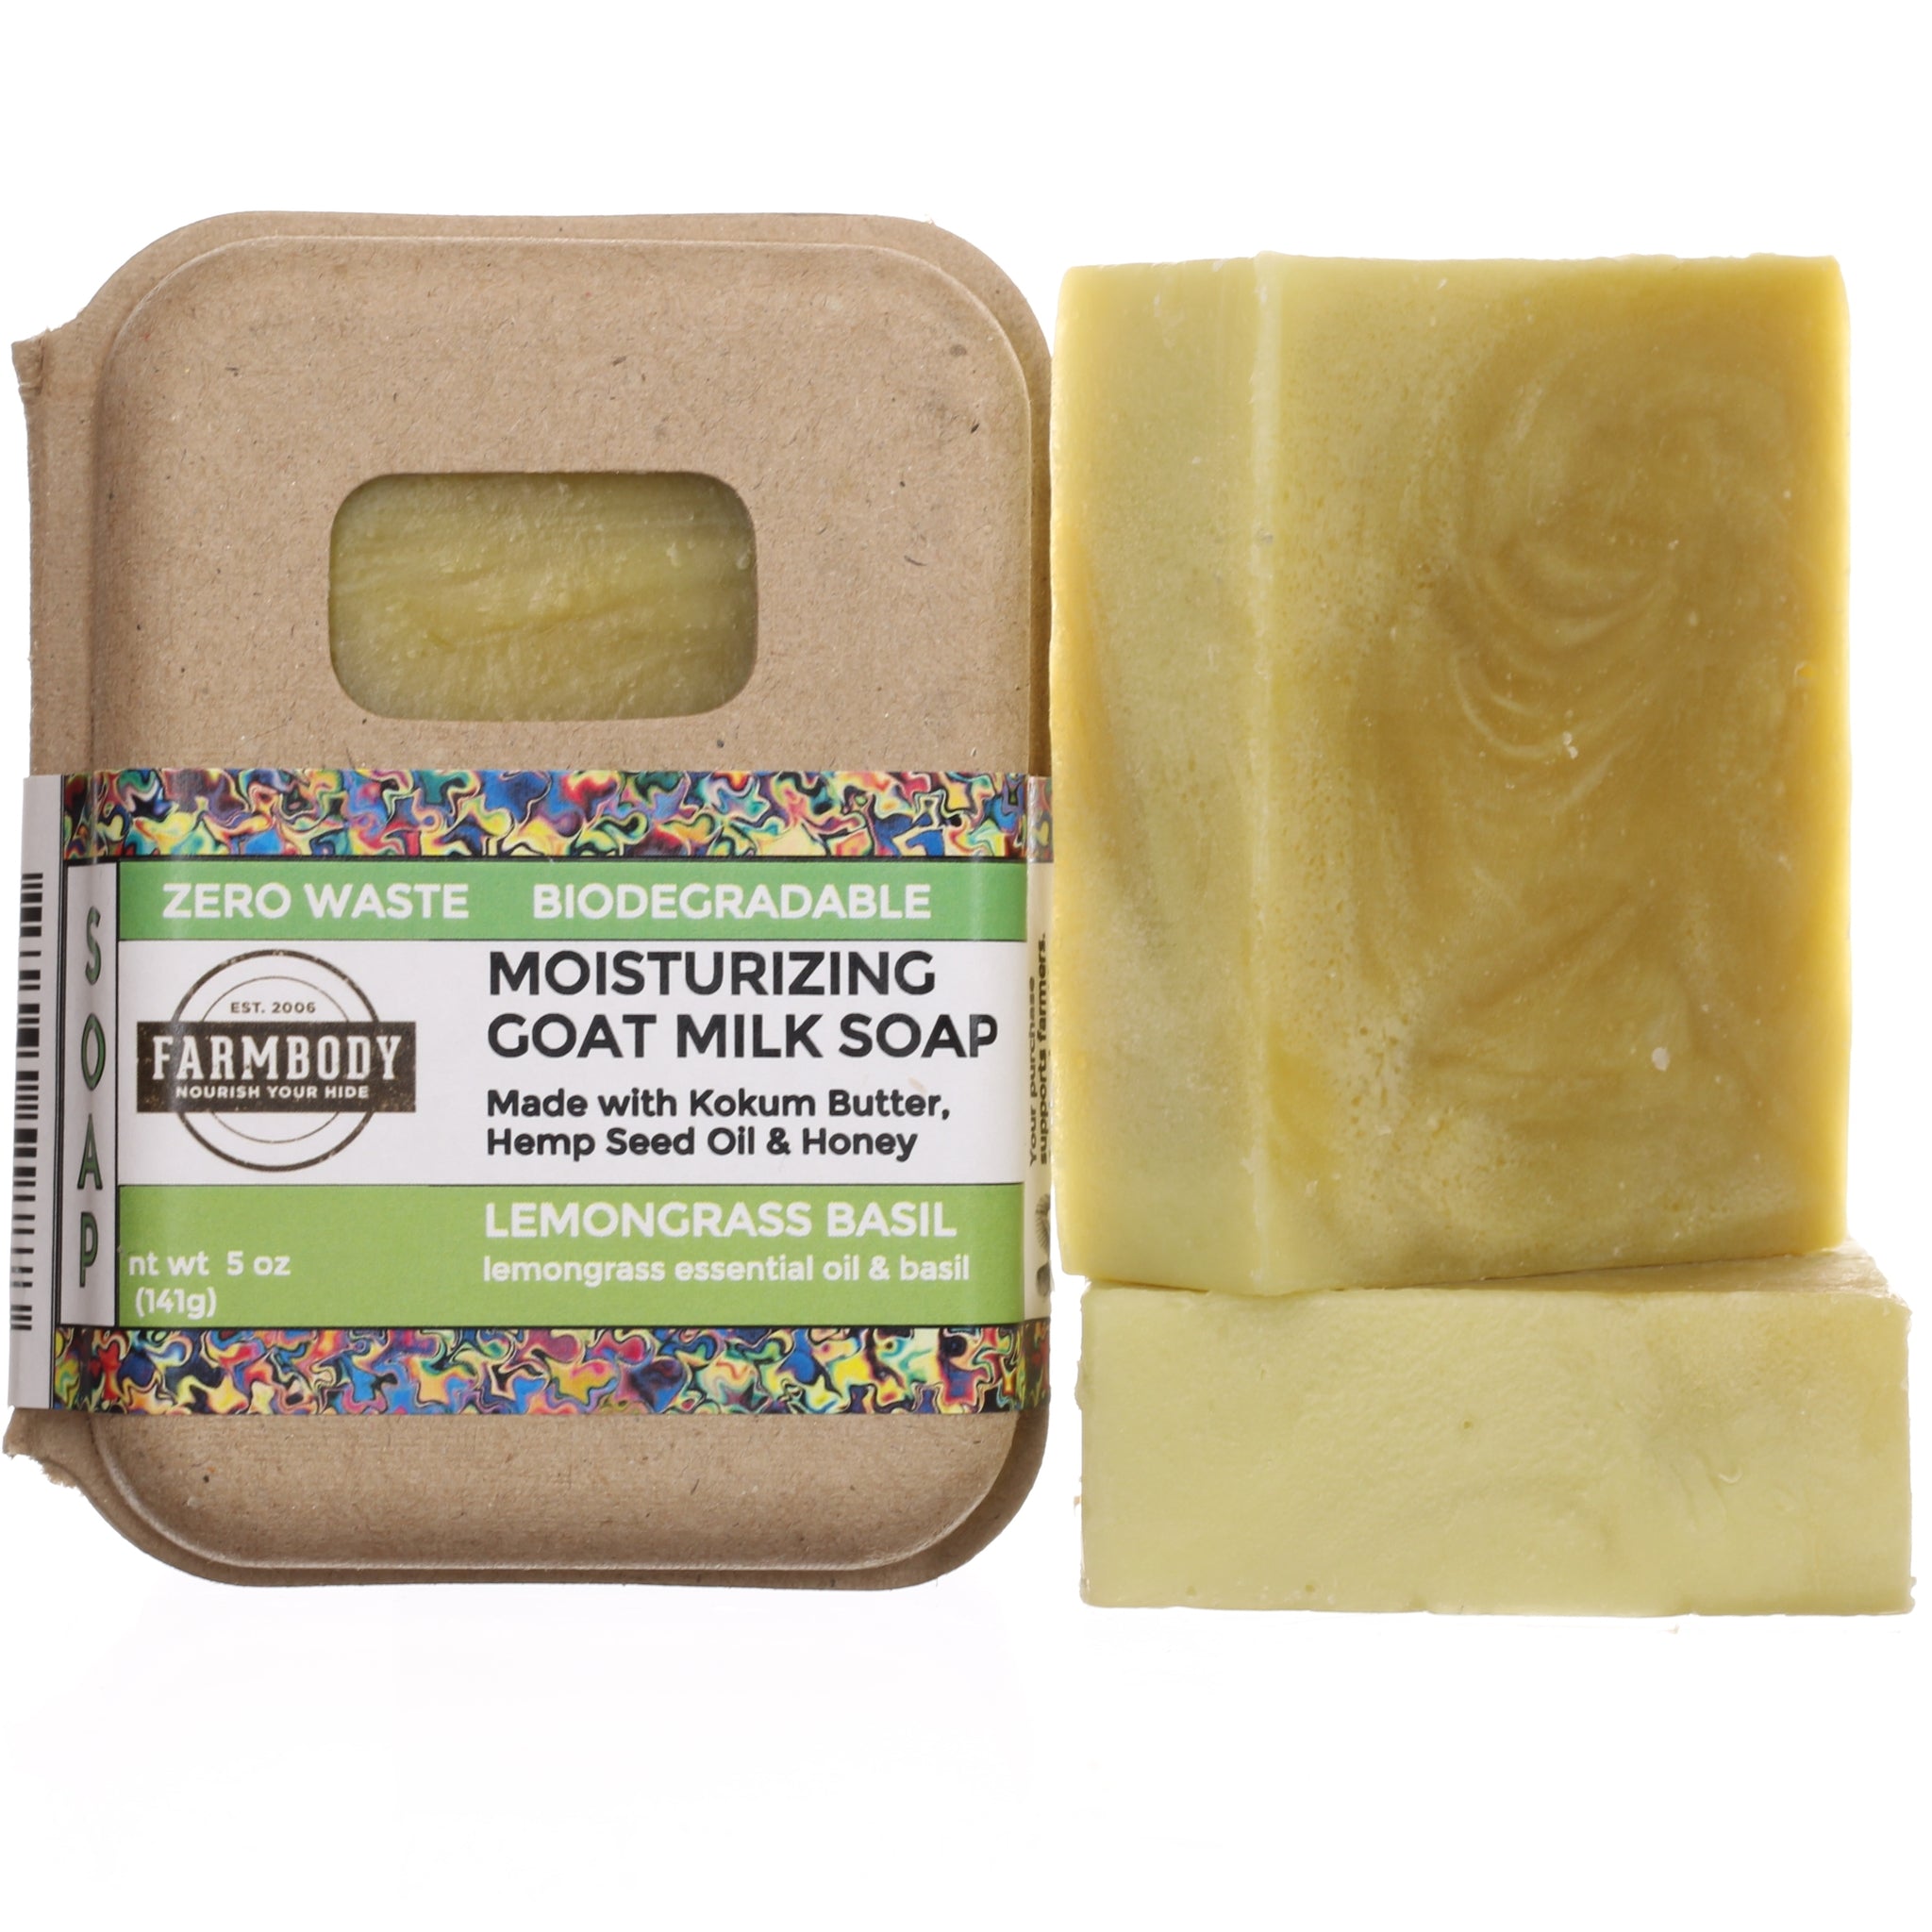 Moisturizing Goat Milk Bar Soap for Sensitive Skin | LEMONGRASS BASIL - Farmbody